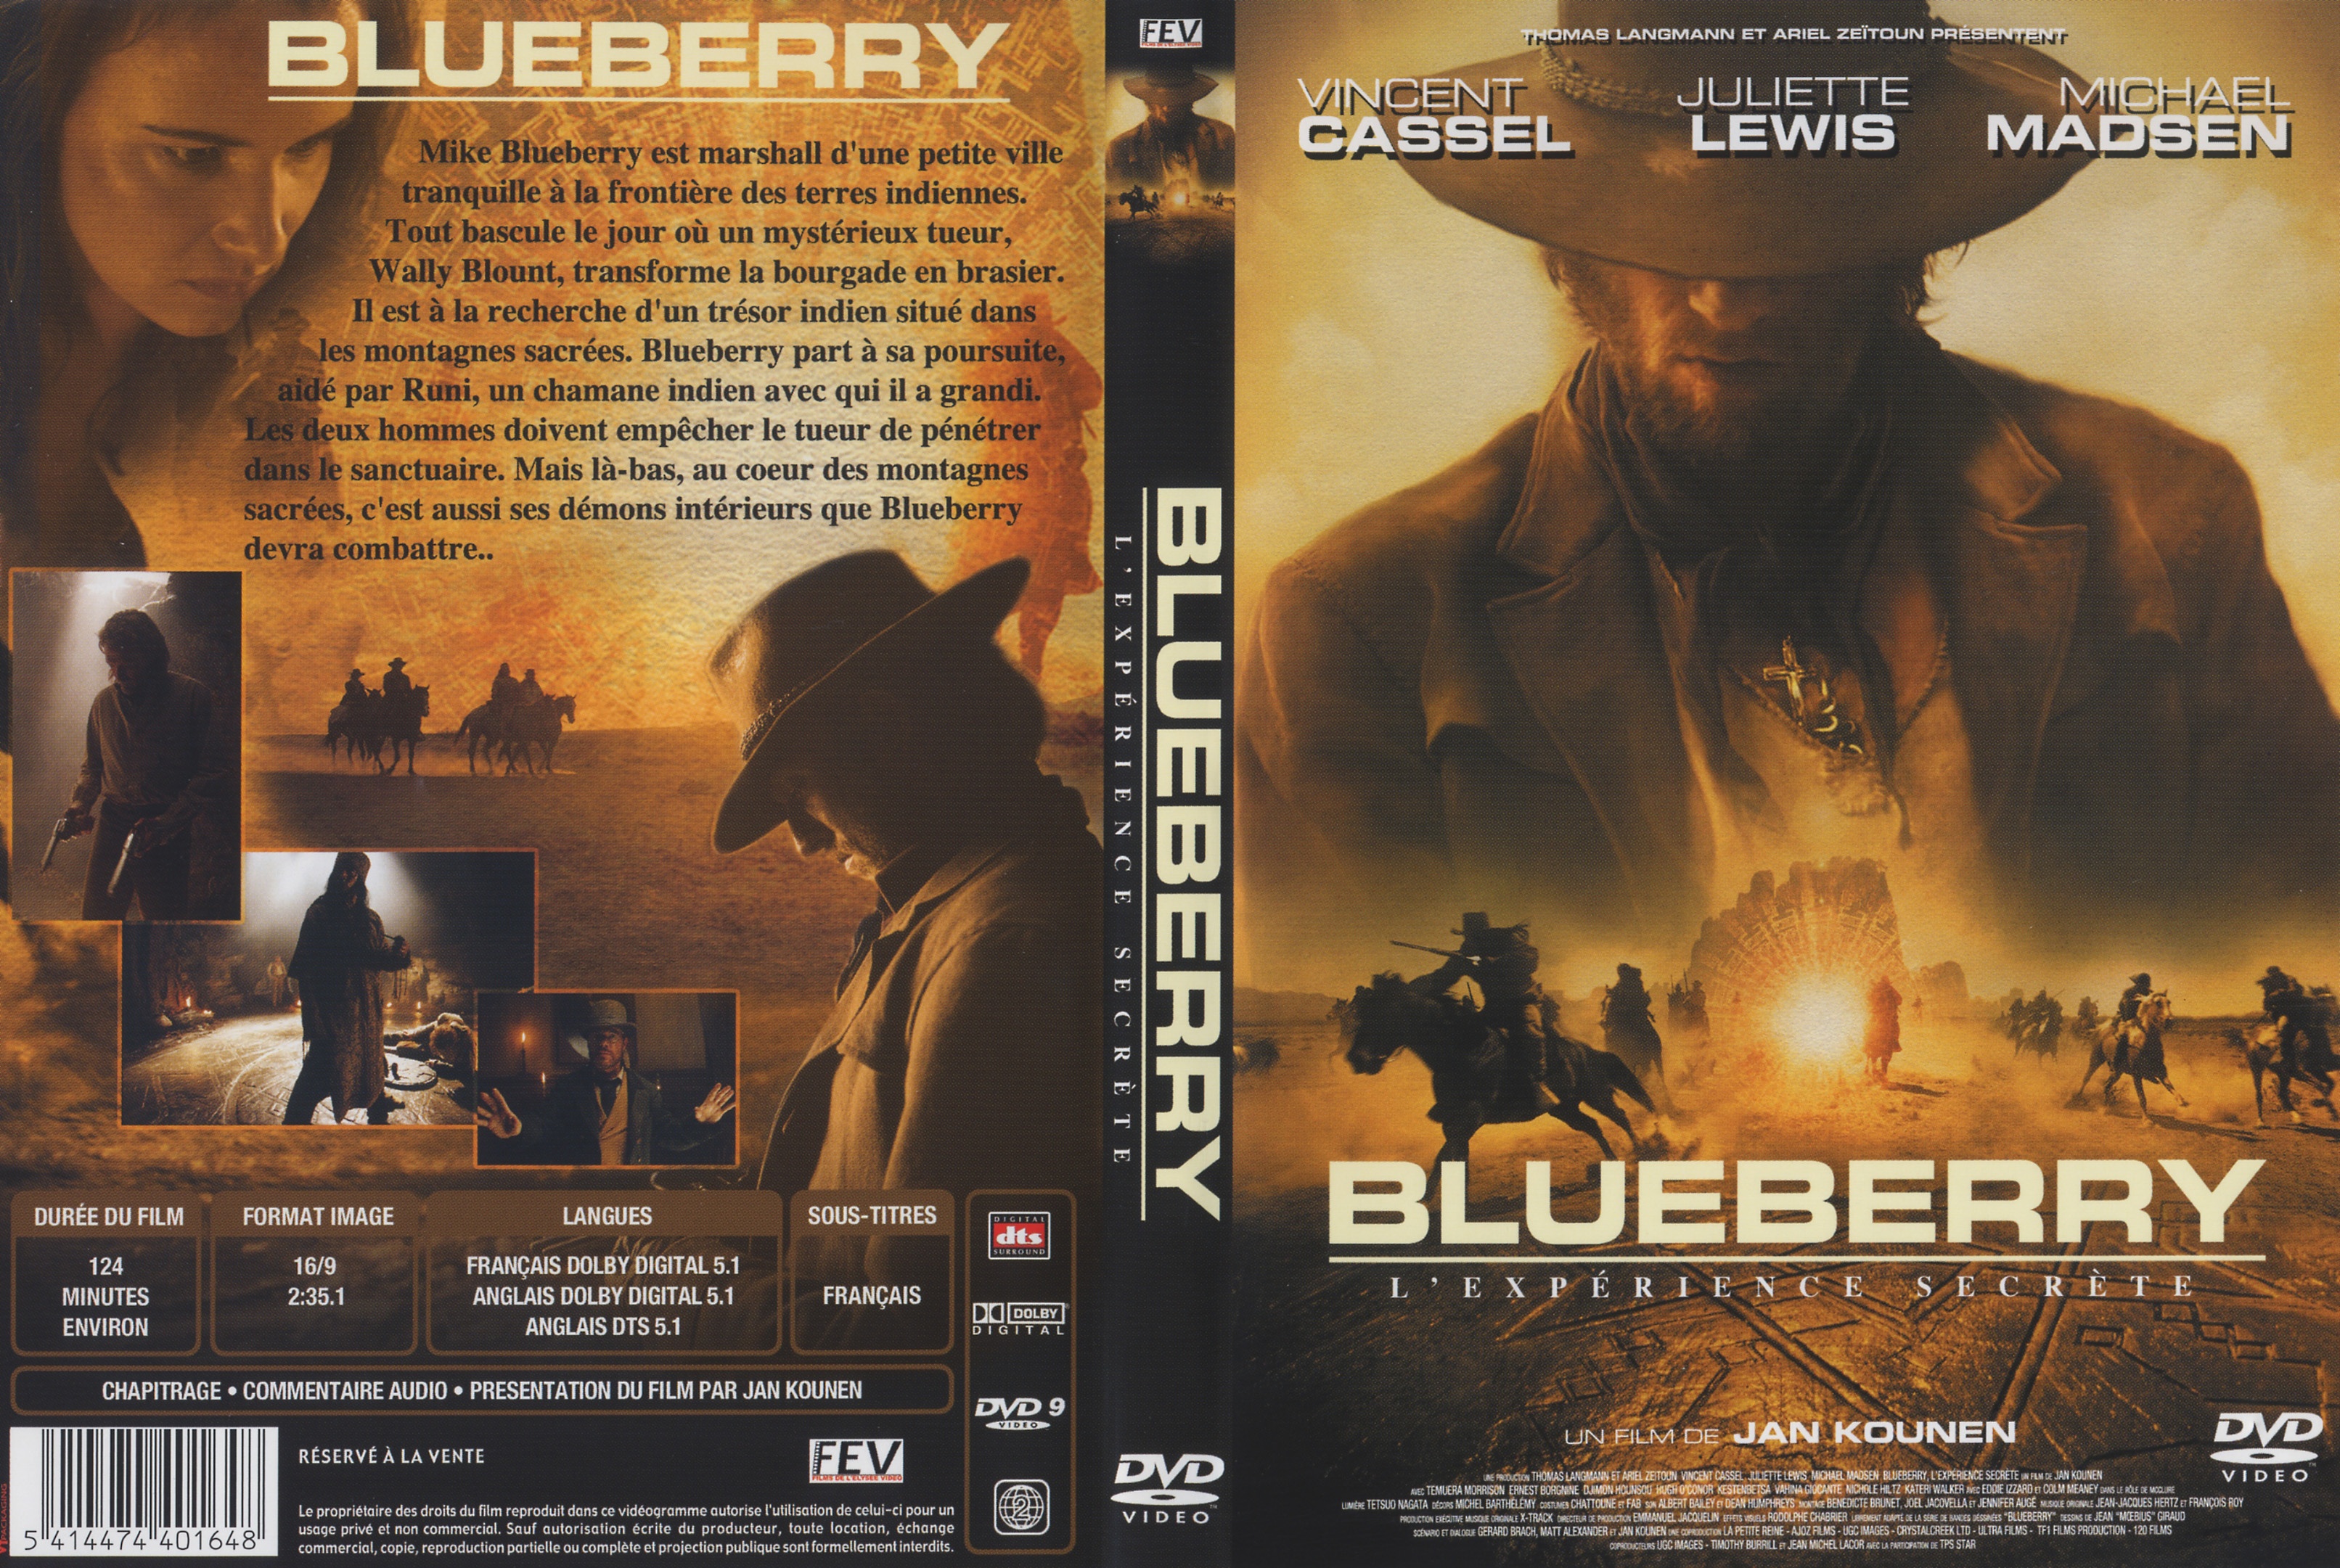 Jaquette DVD Blueberry v2